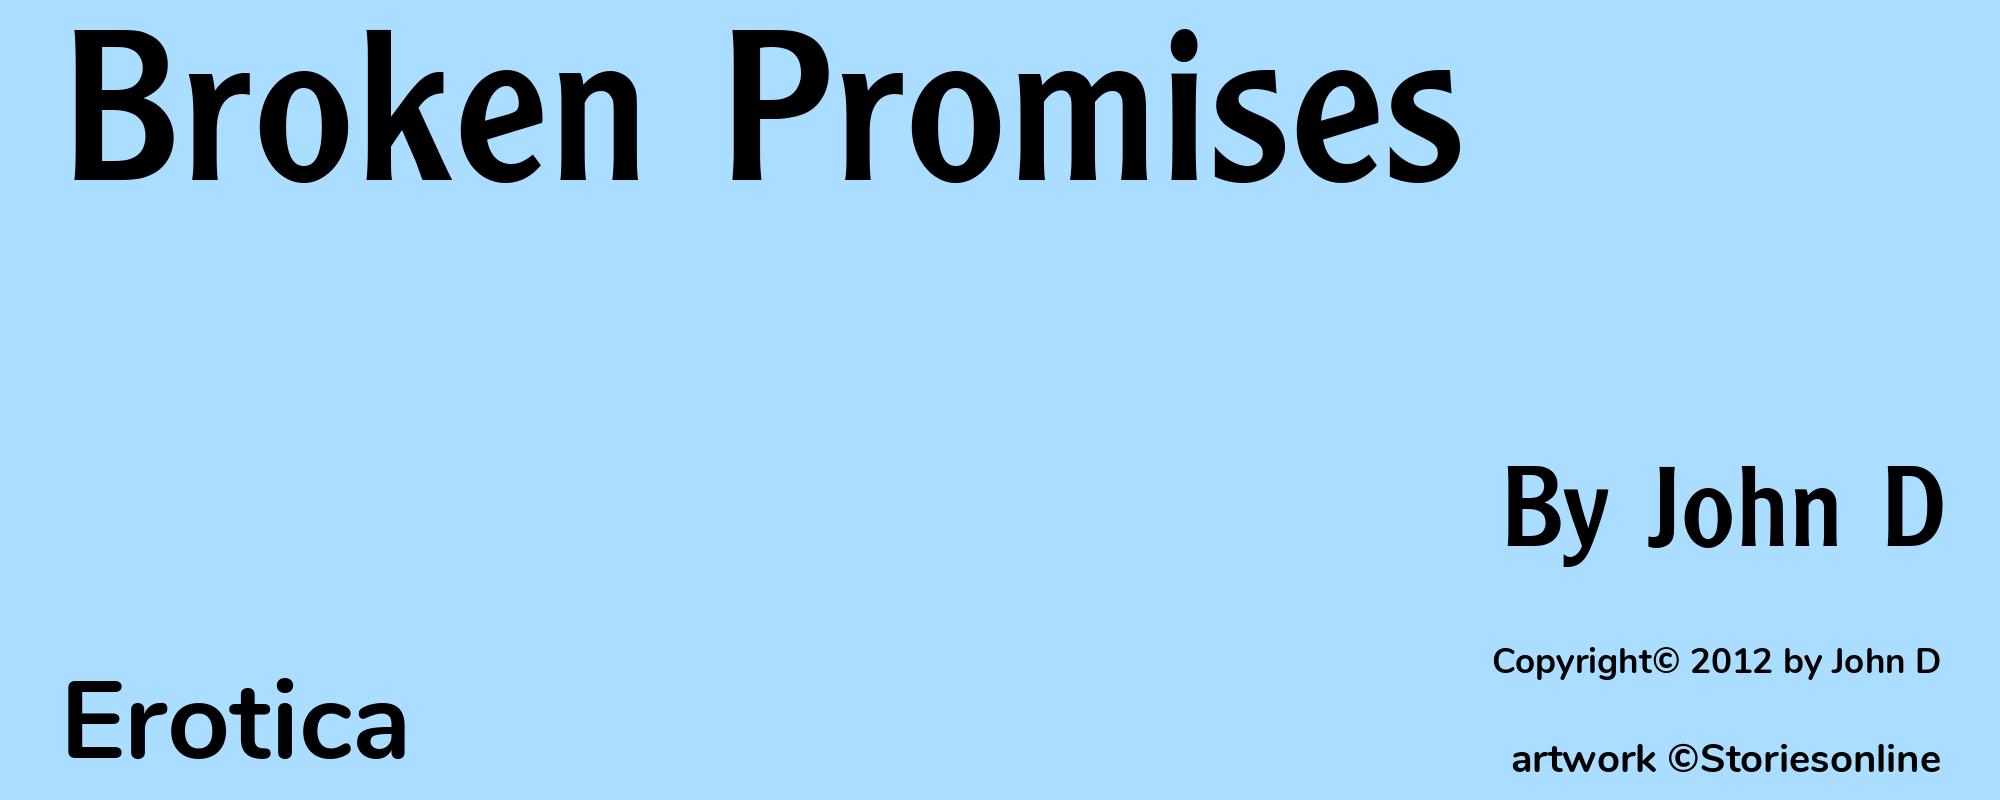 Broken Promises - Cover